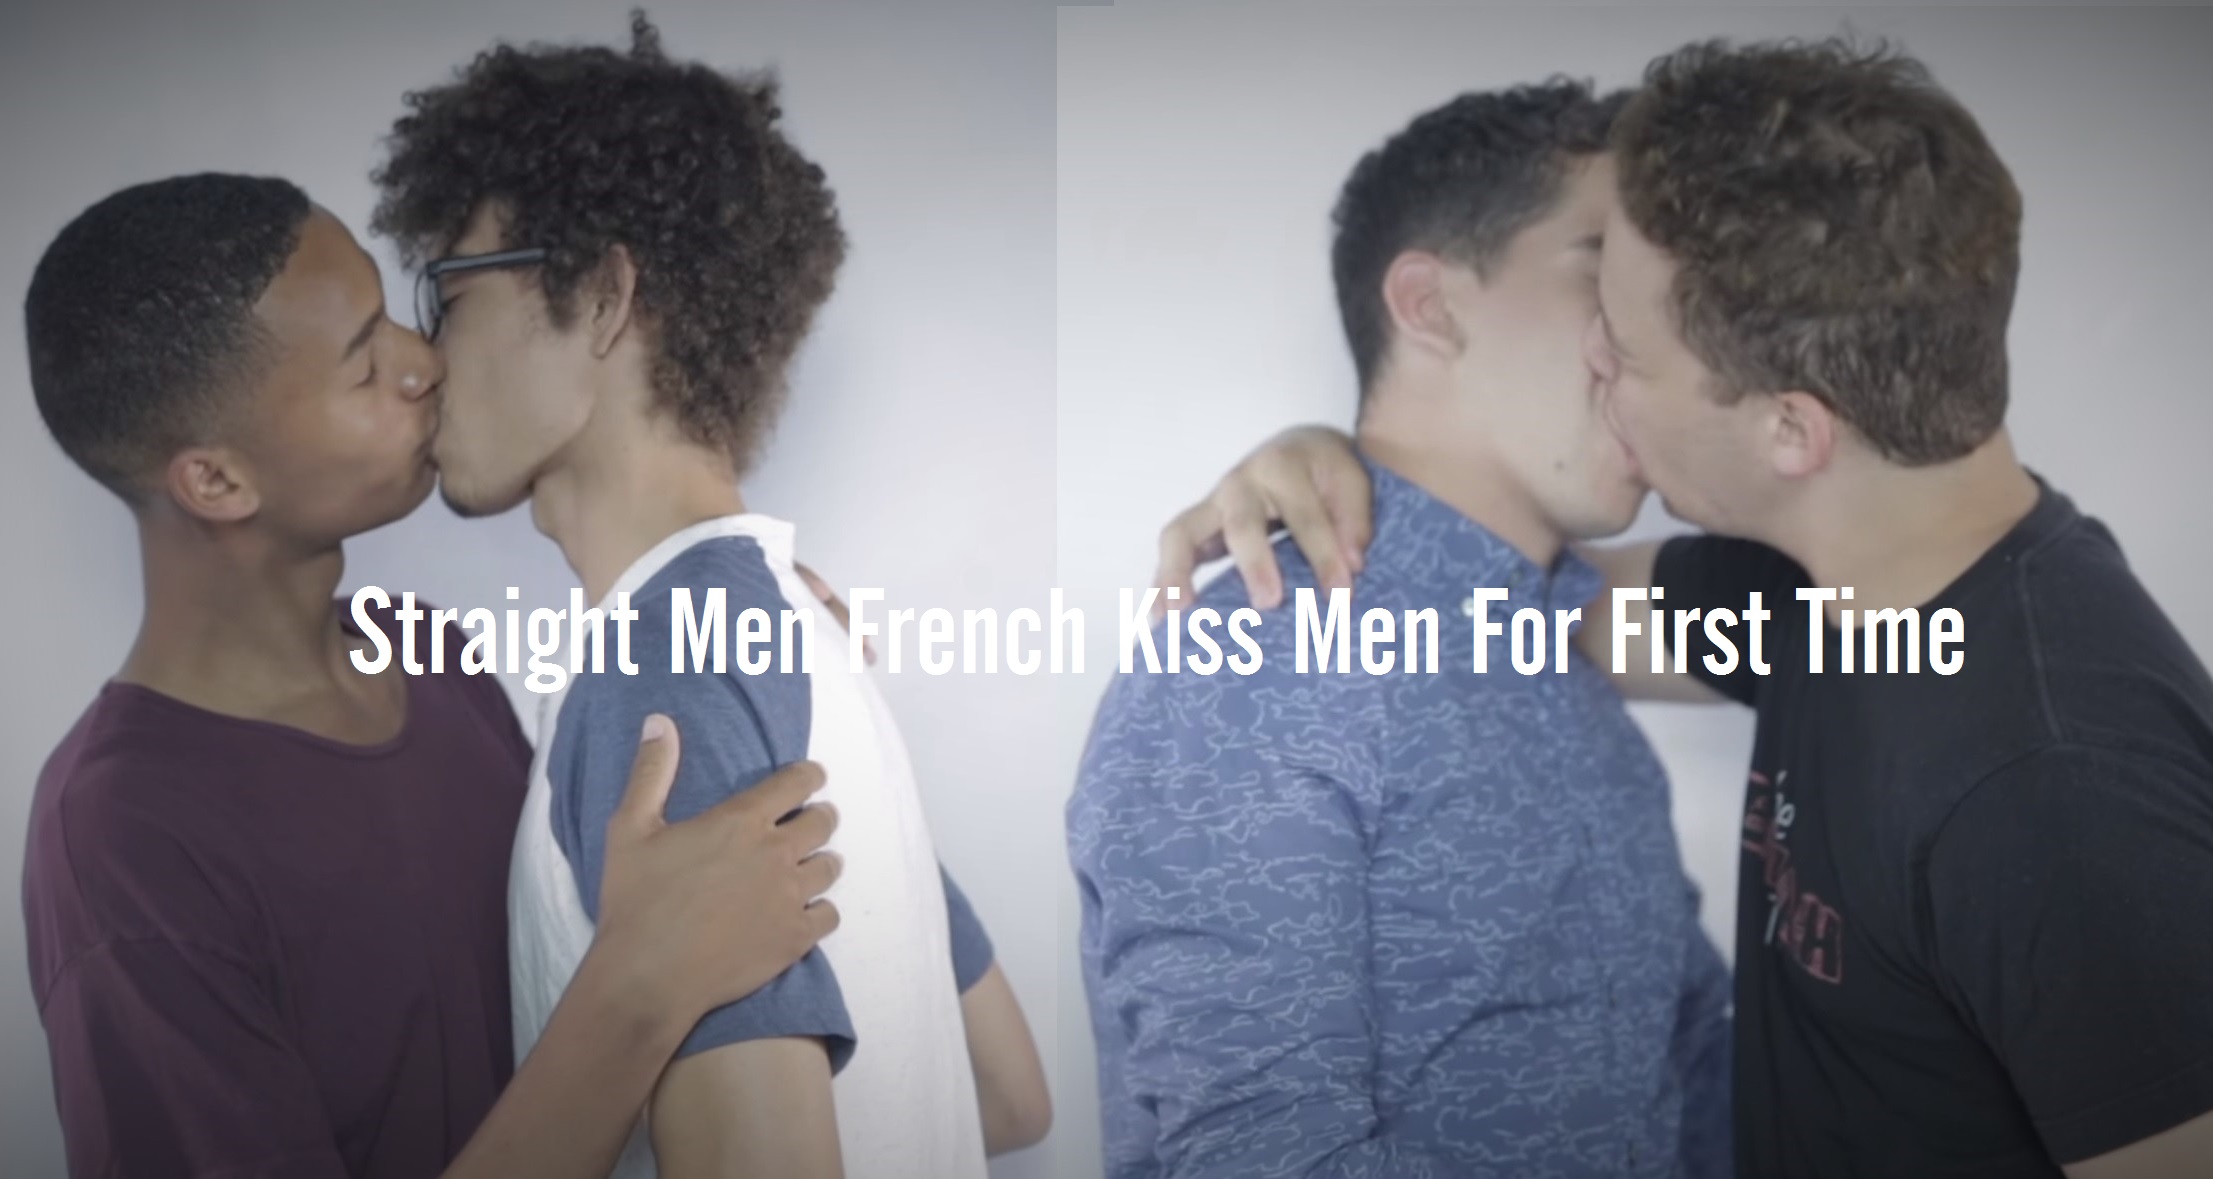 Greys anatomy finally get us a landmark gay love scene